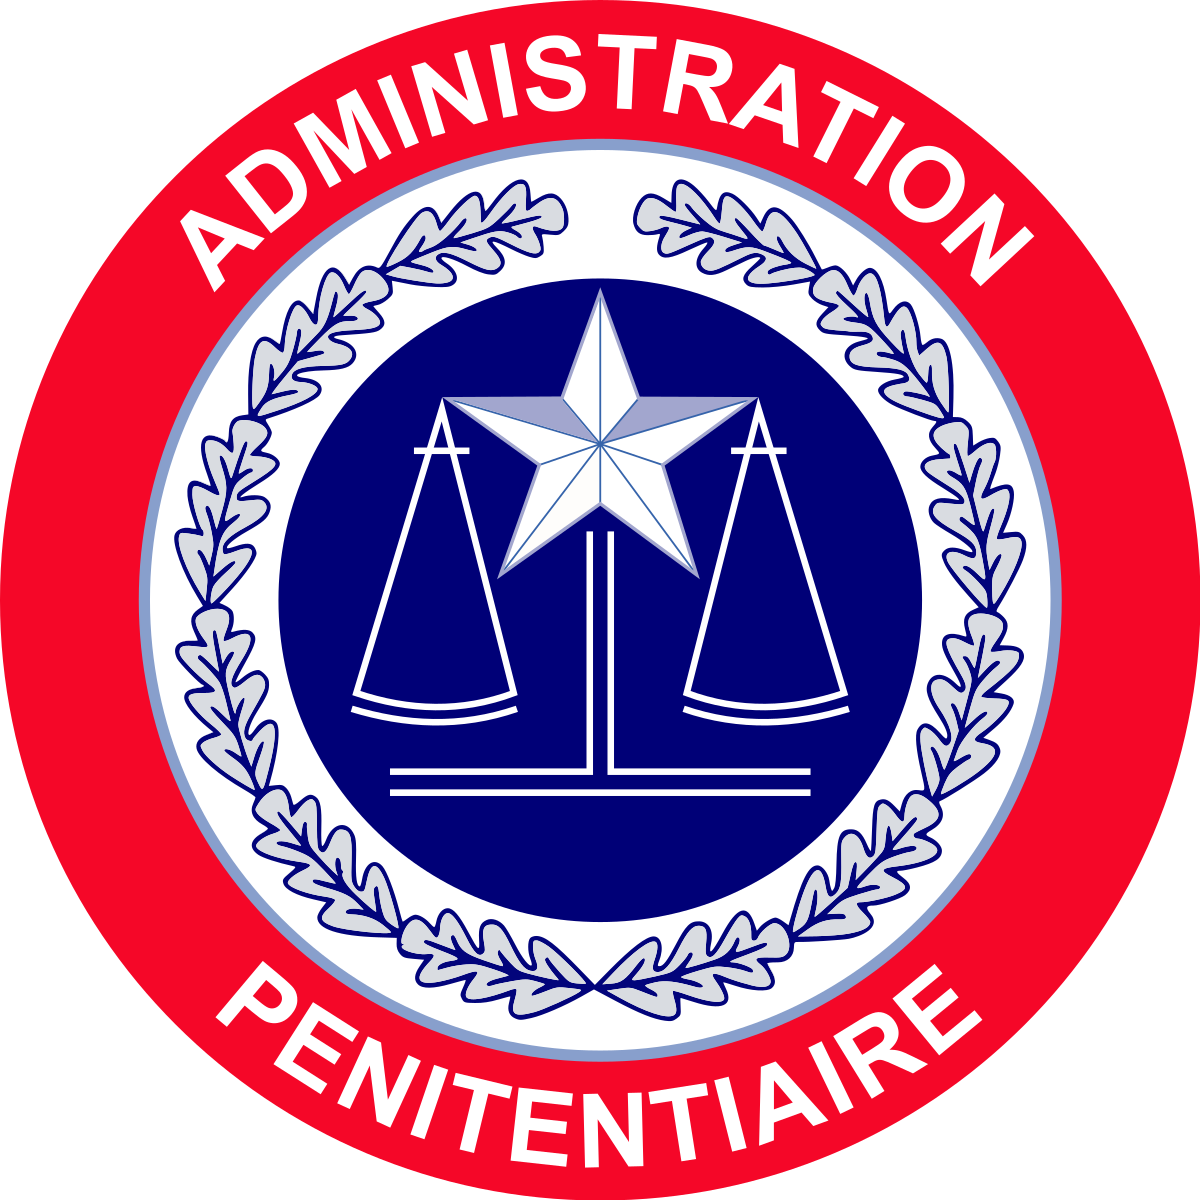 Administration pénitentiaire